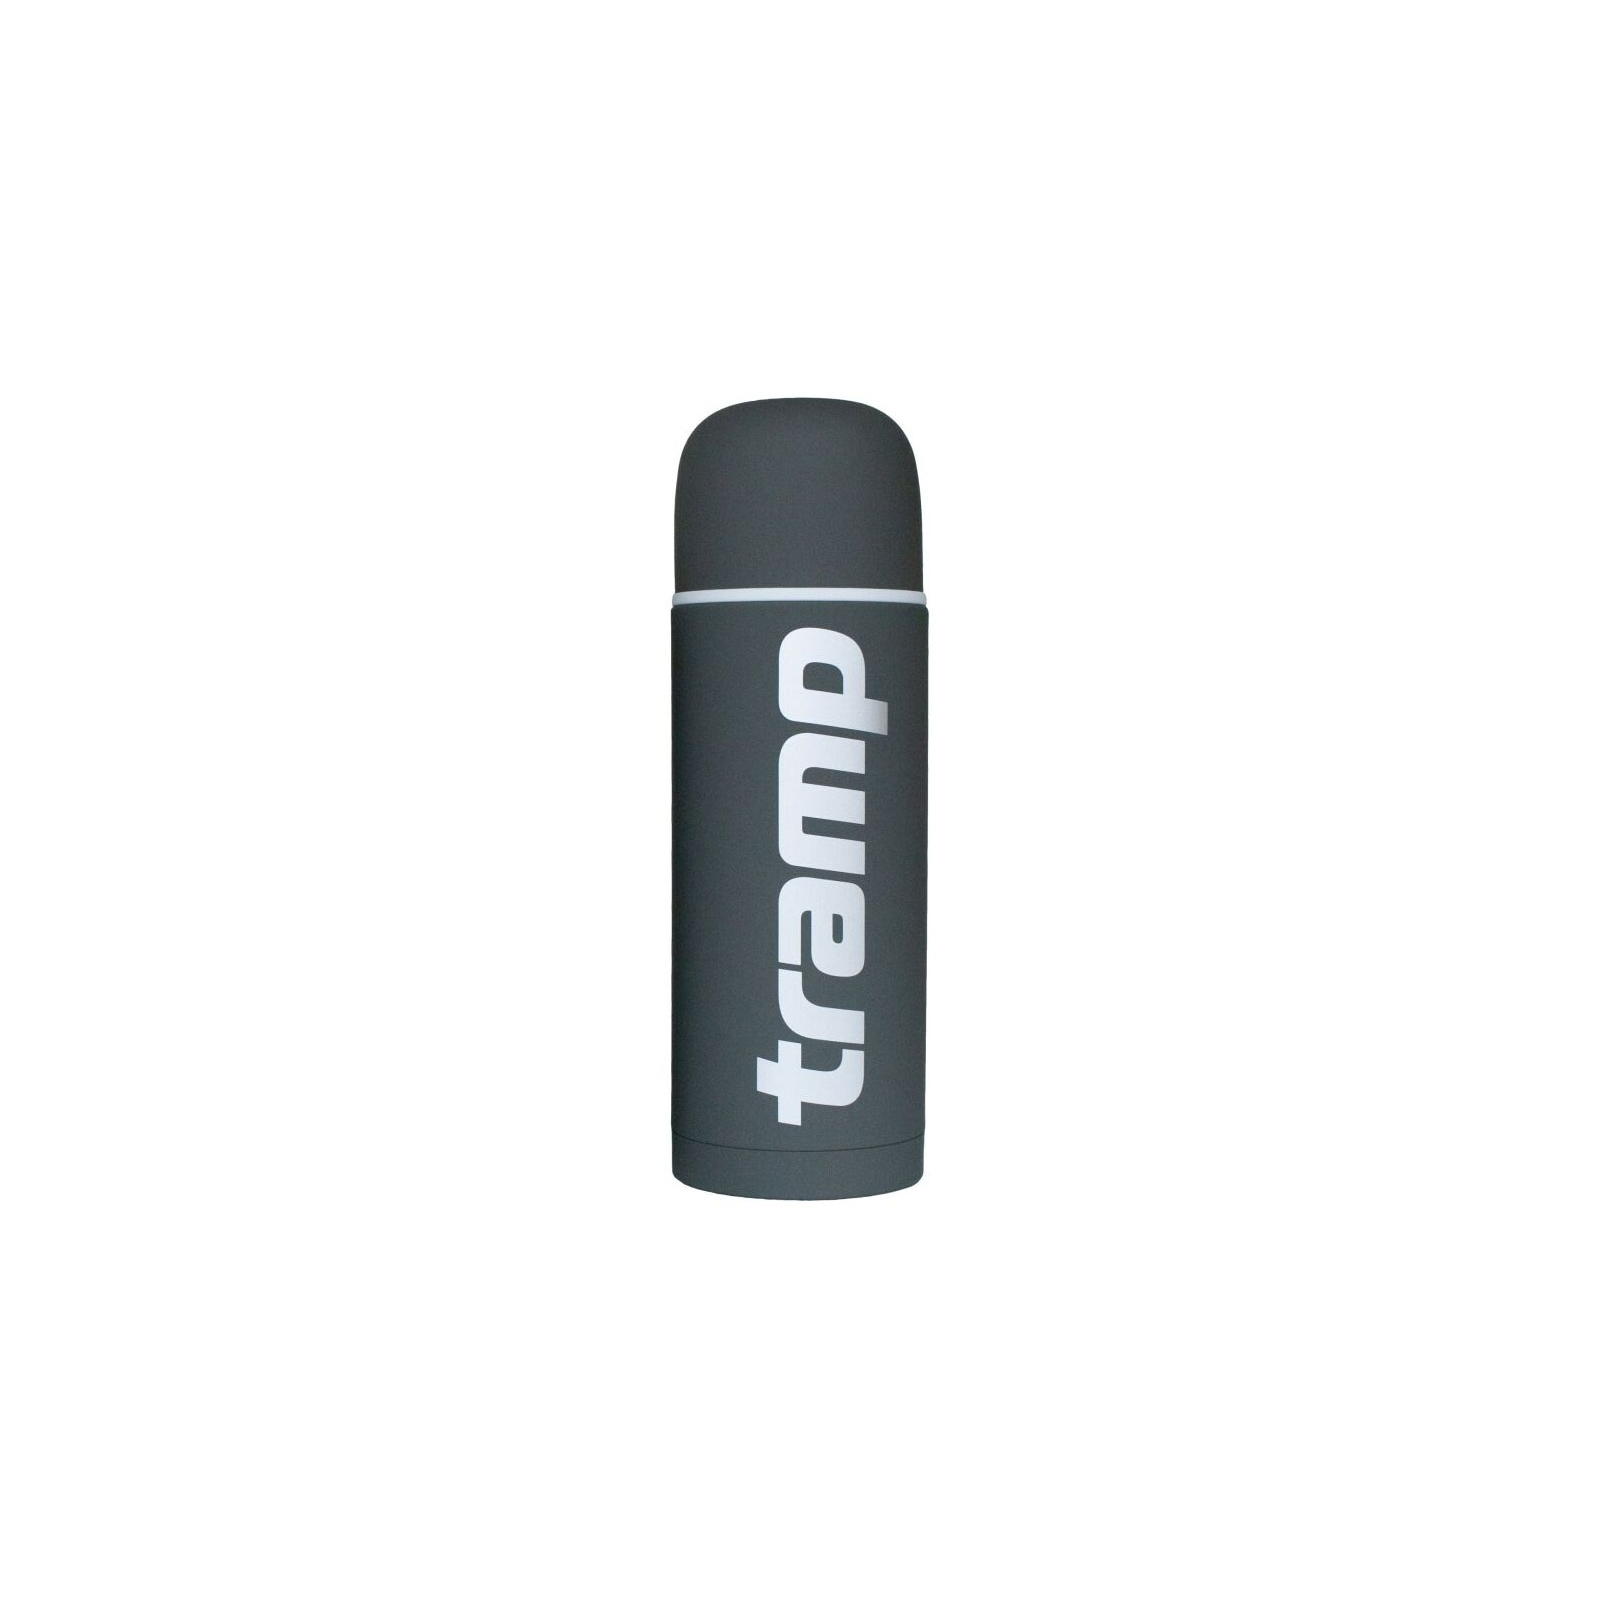 Термос Tramp Soft Touch 1.2 л Orange (TRC-110-orange)